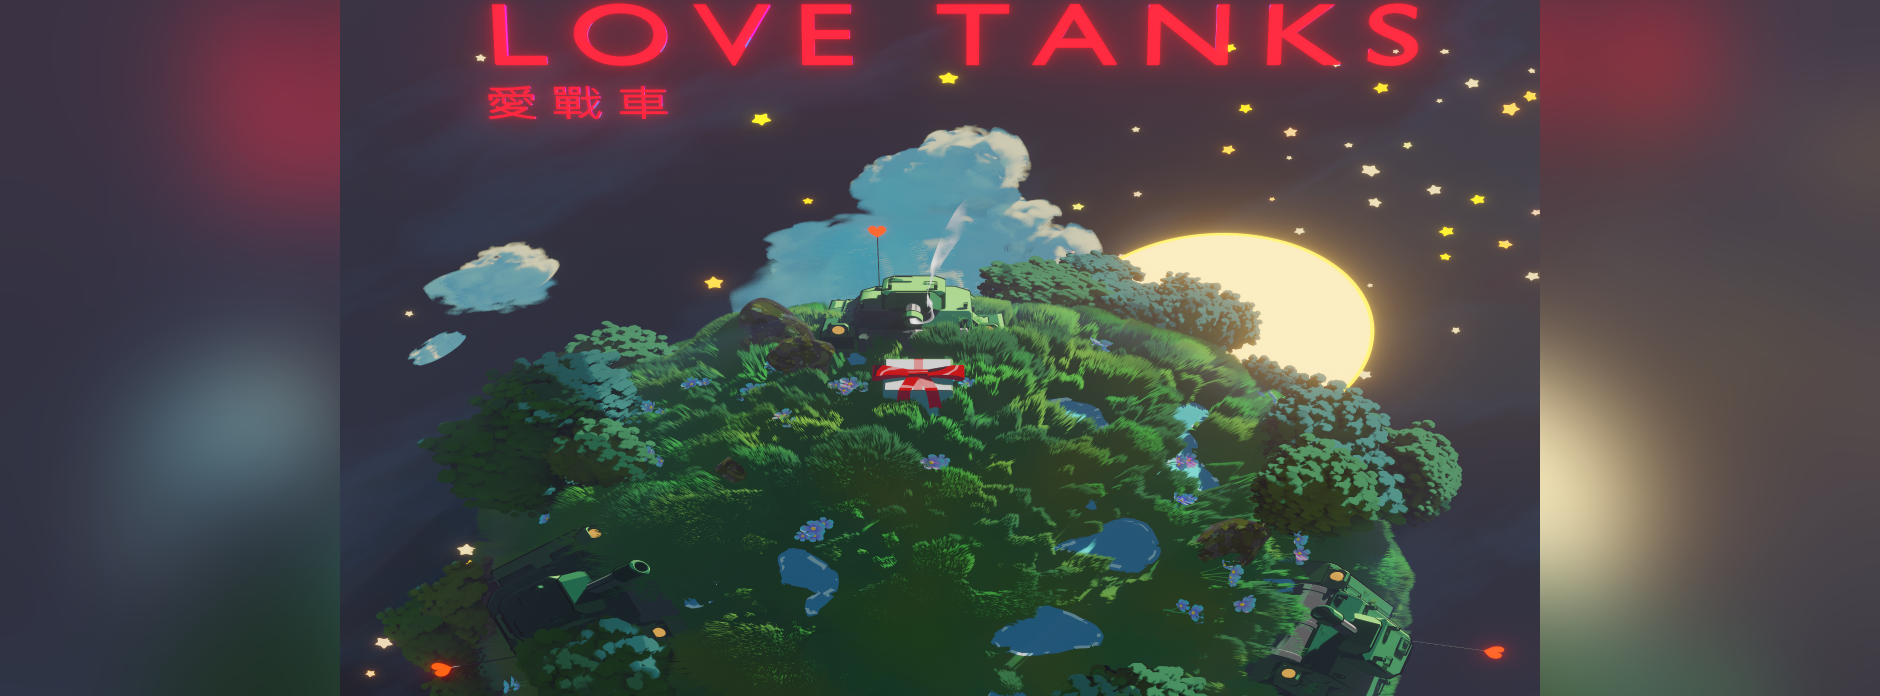 Love Tanks!